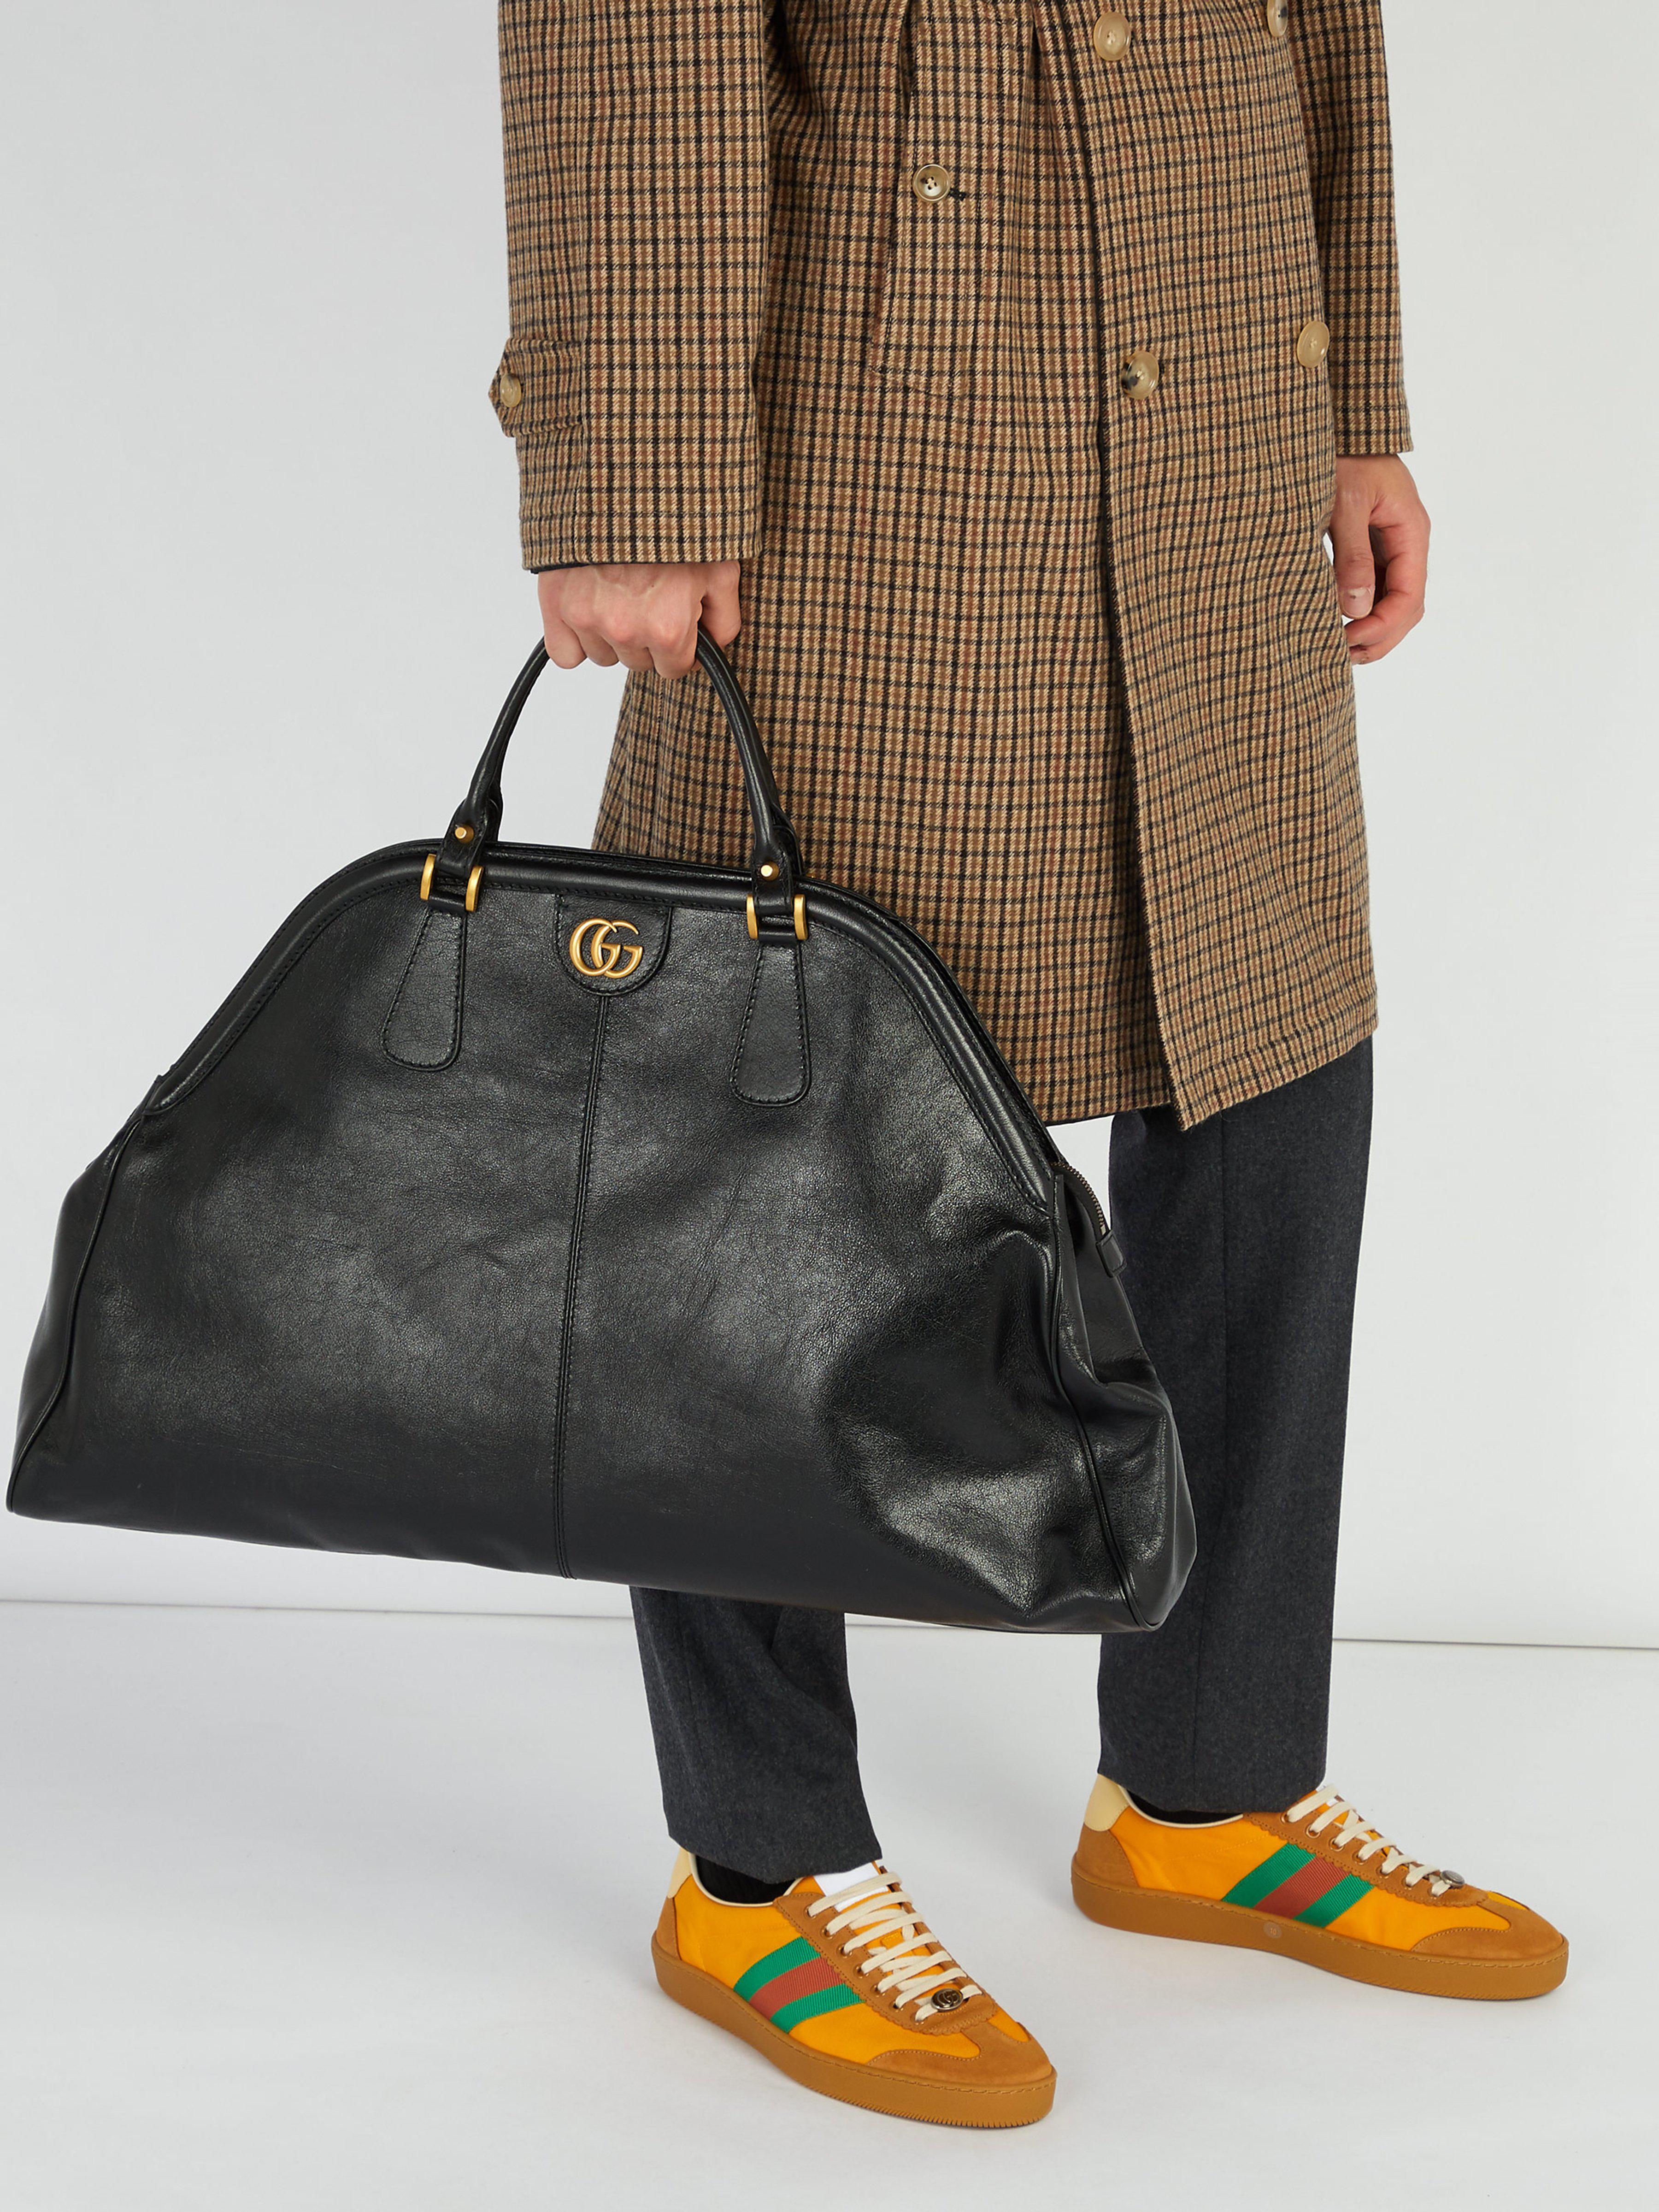 Gucci Rebelle Bag Large Online Sale, UP TO 51% OFF